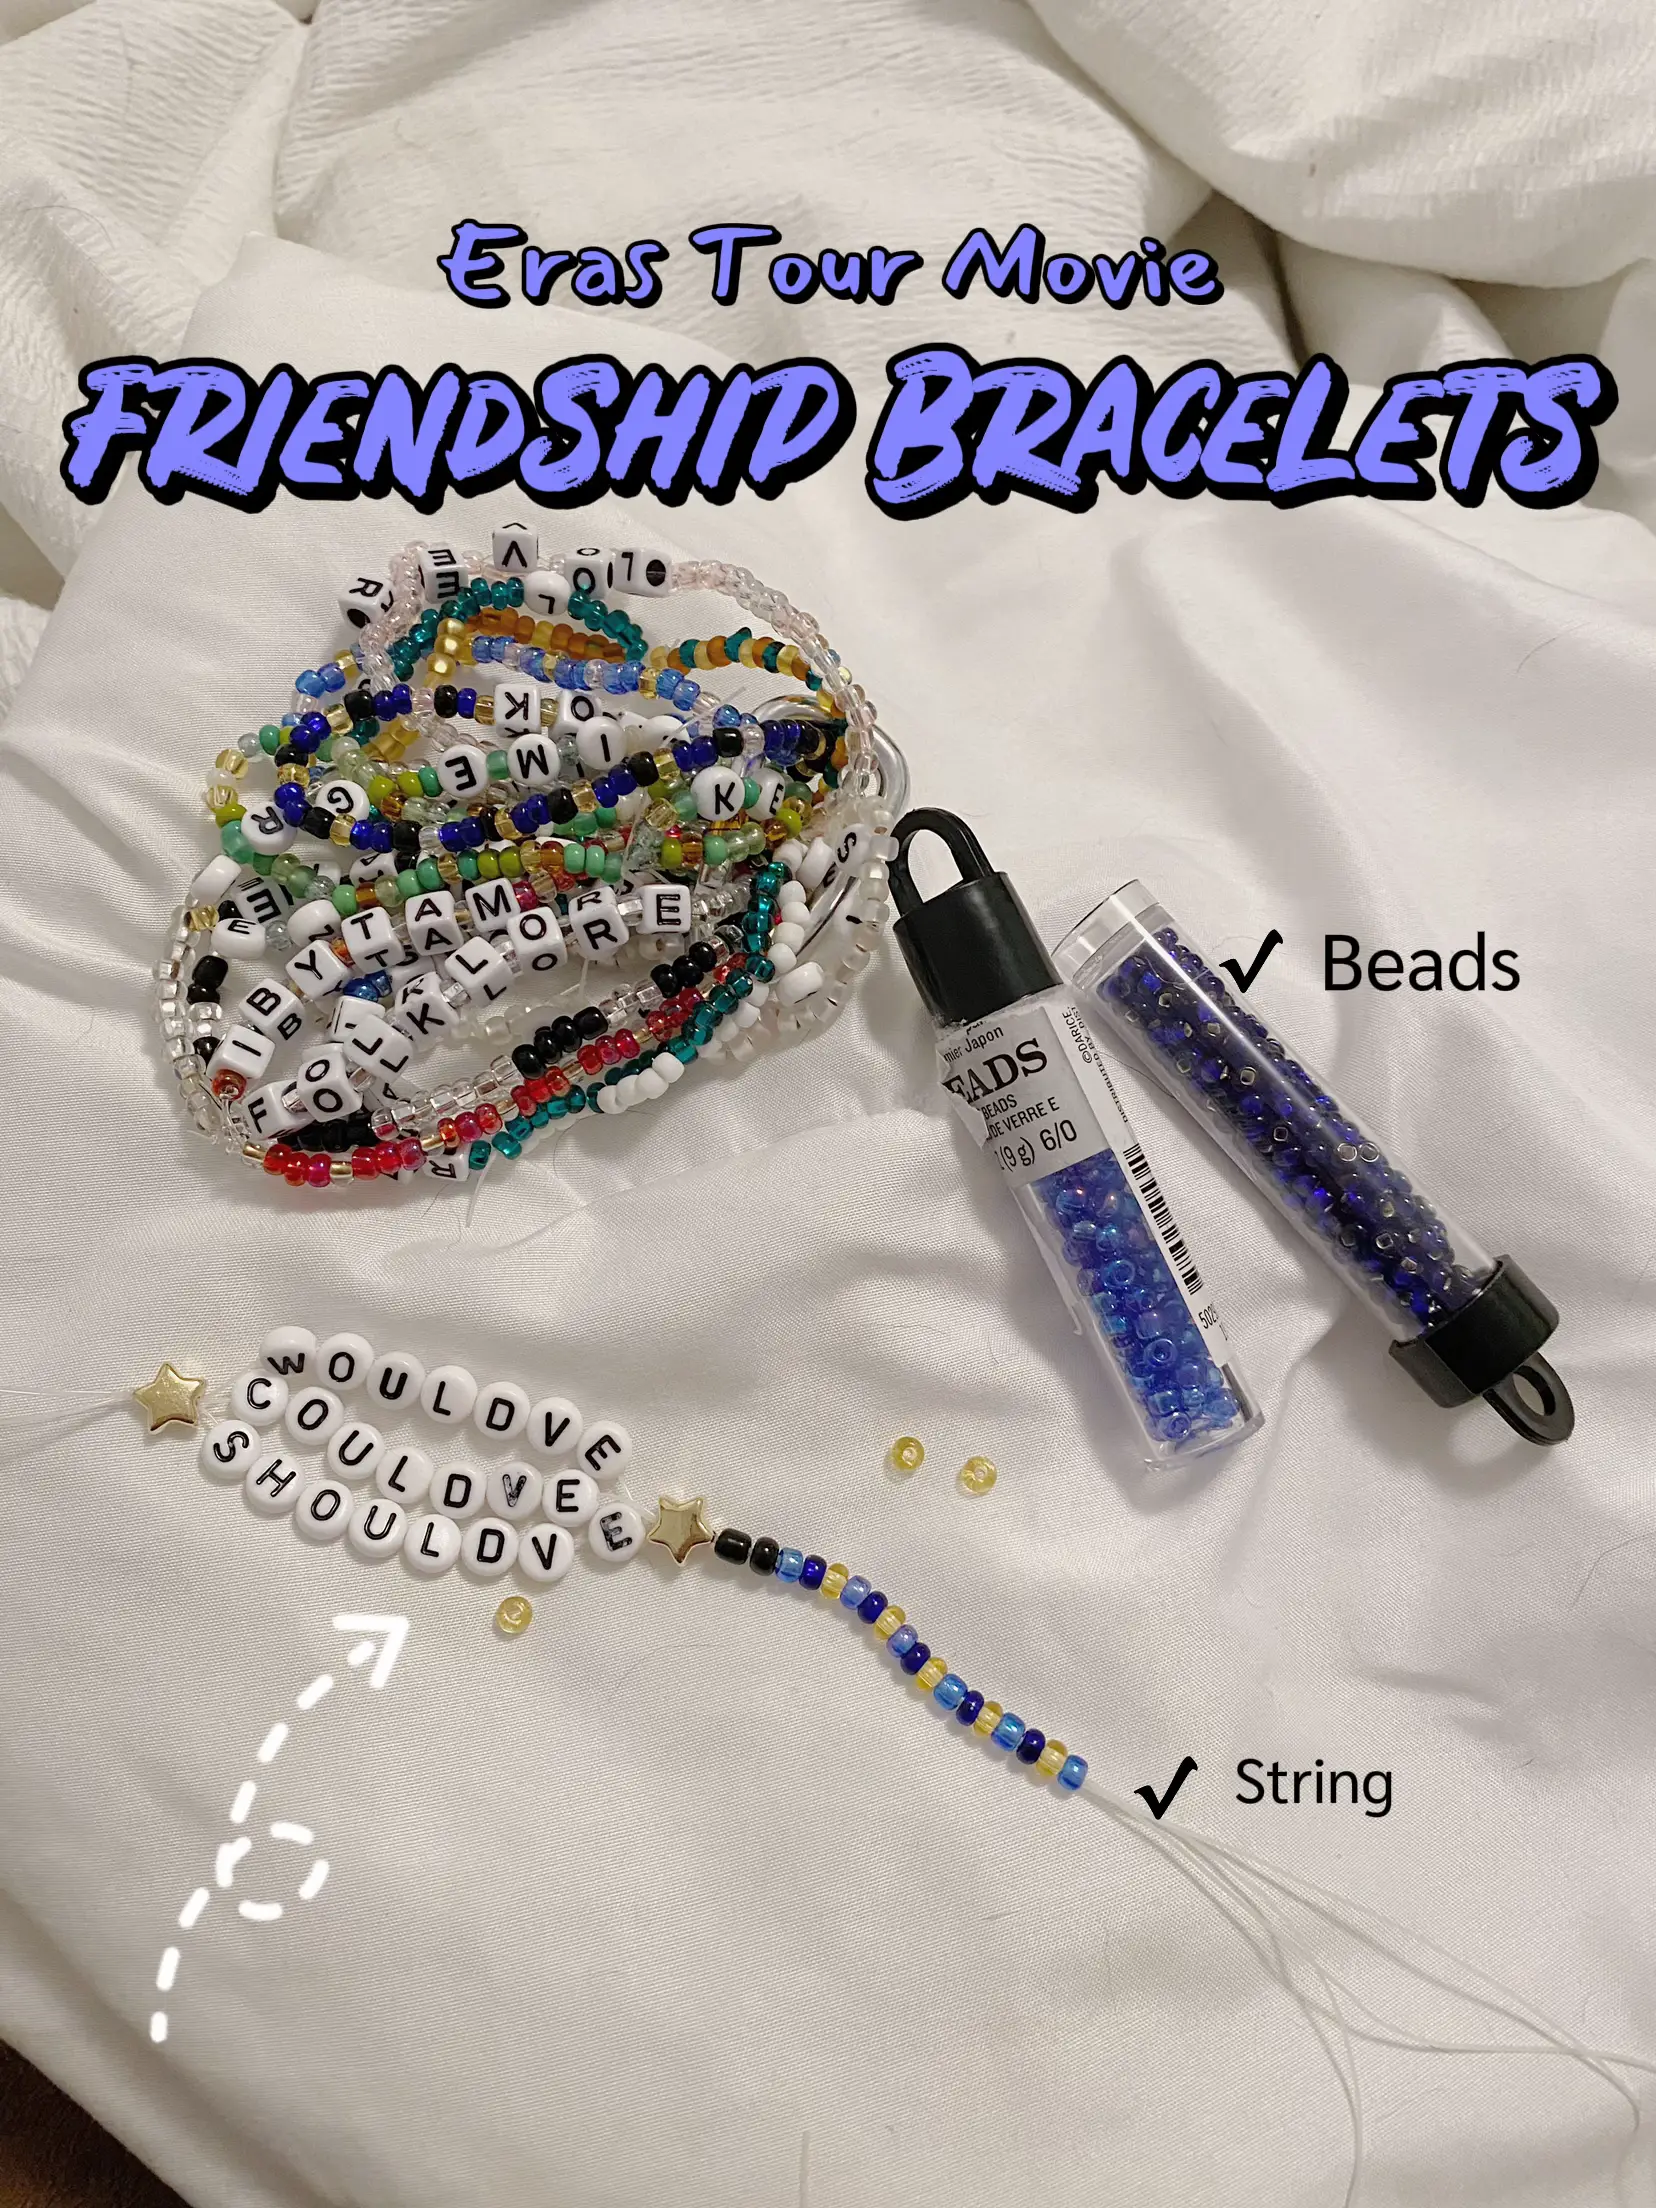 Midnights DIY Friendship Bracelet Kit taylor Swift Eras Tour